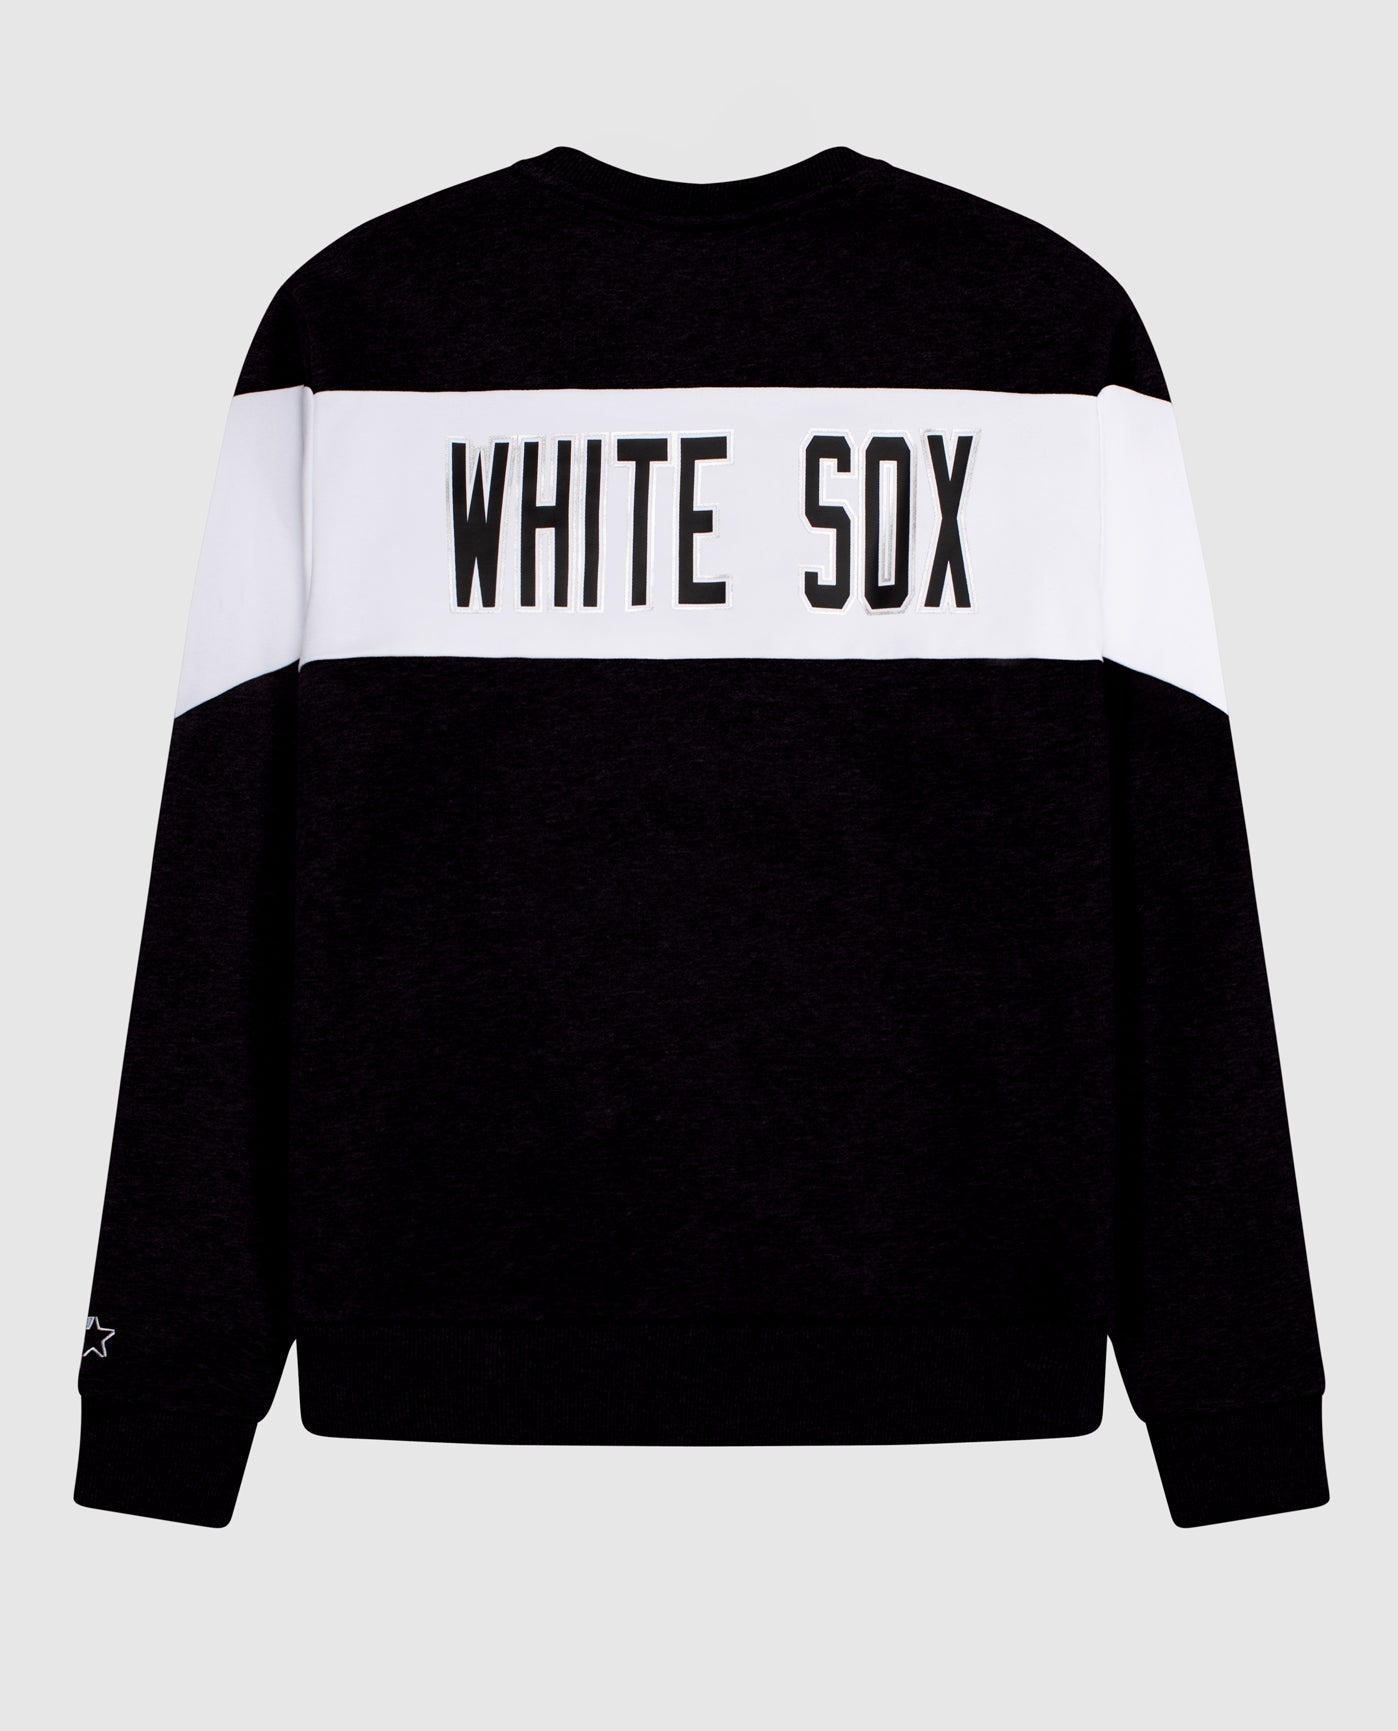 New Era Women's Chicago White Sox Black Fleece Crew Neck Sweatshirt